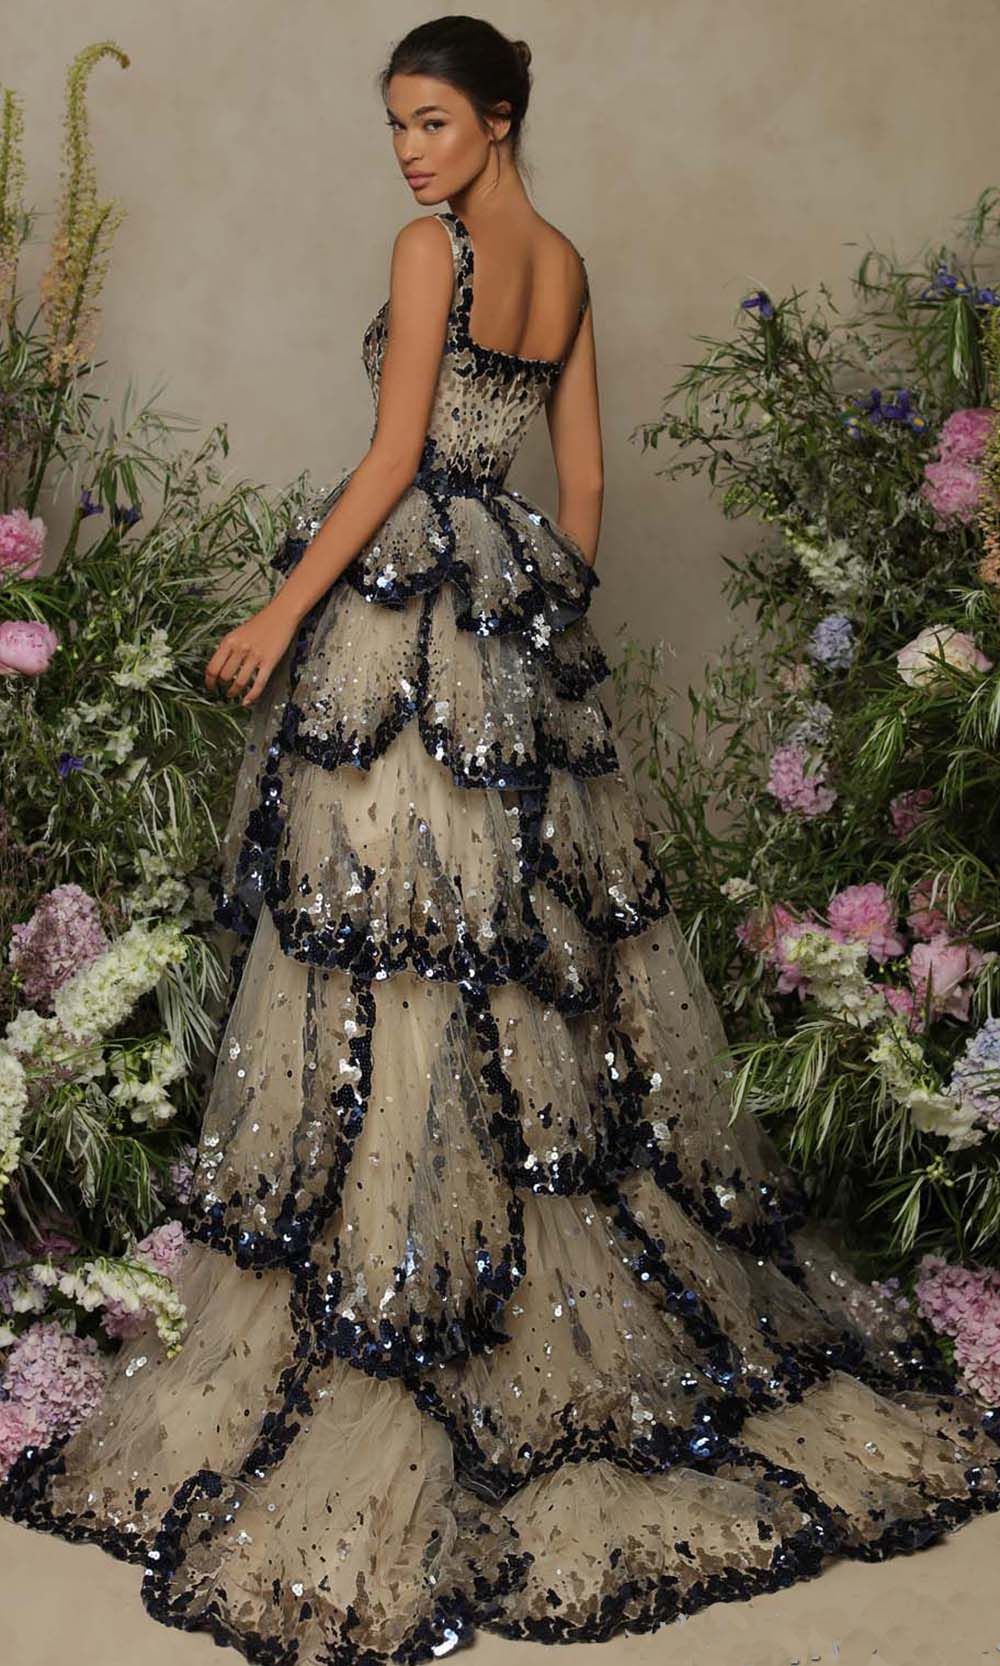 Effortless Elegance: The Layered Dress for Effortless Style